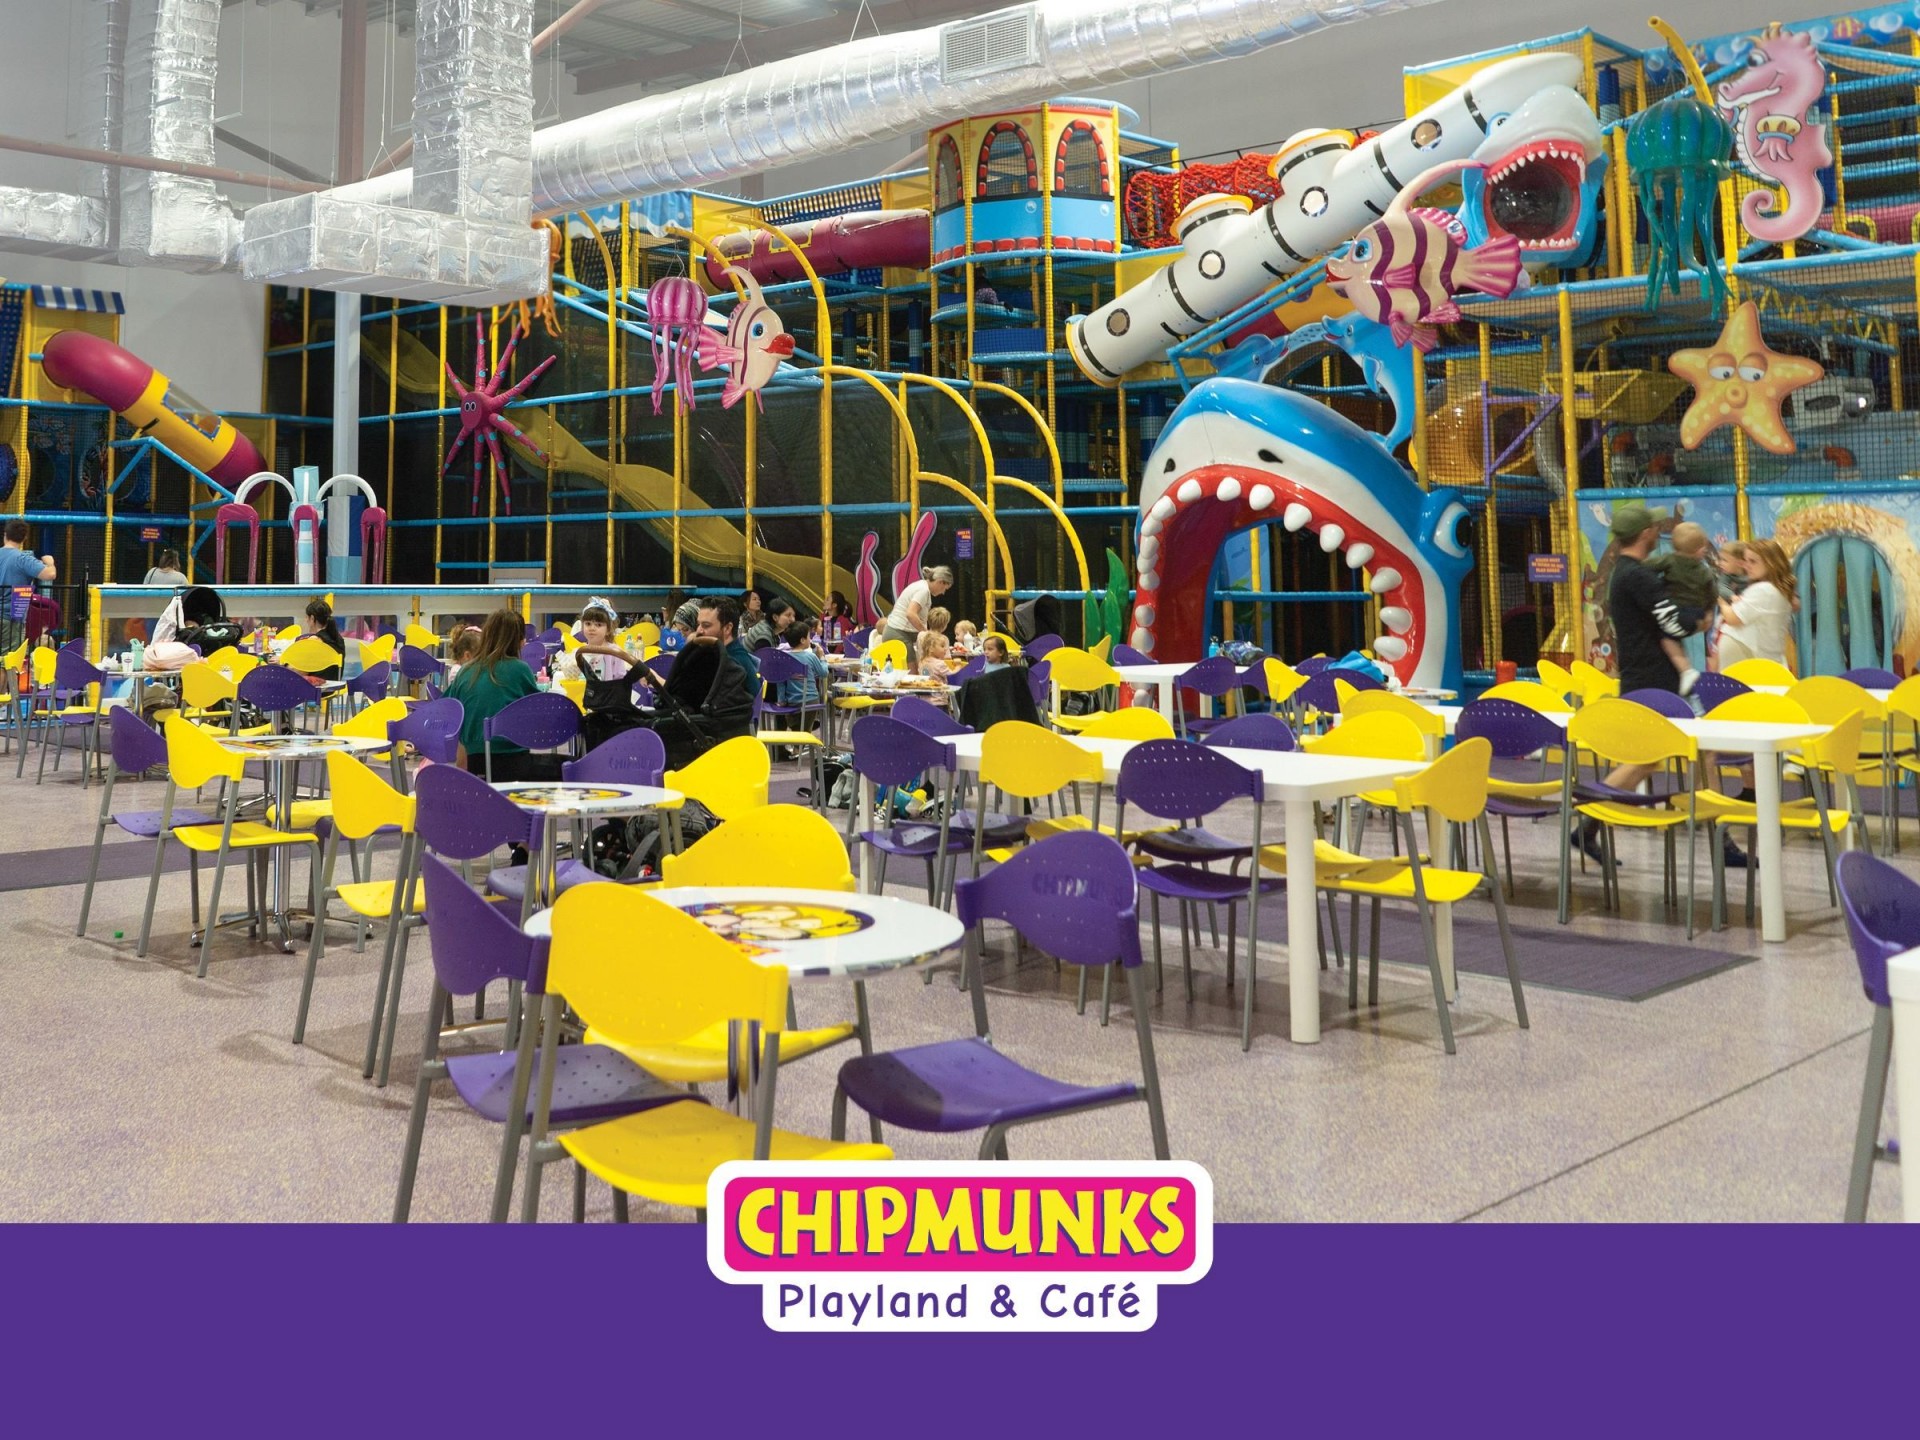 Chipmunks indoor playground franchise for sale - Cannington